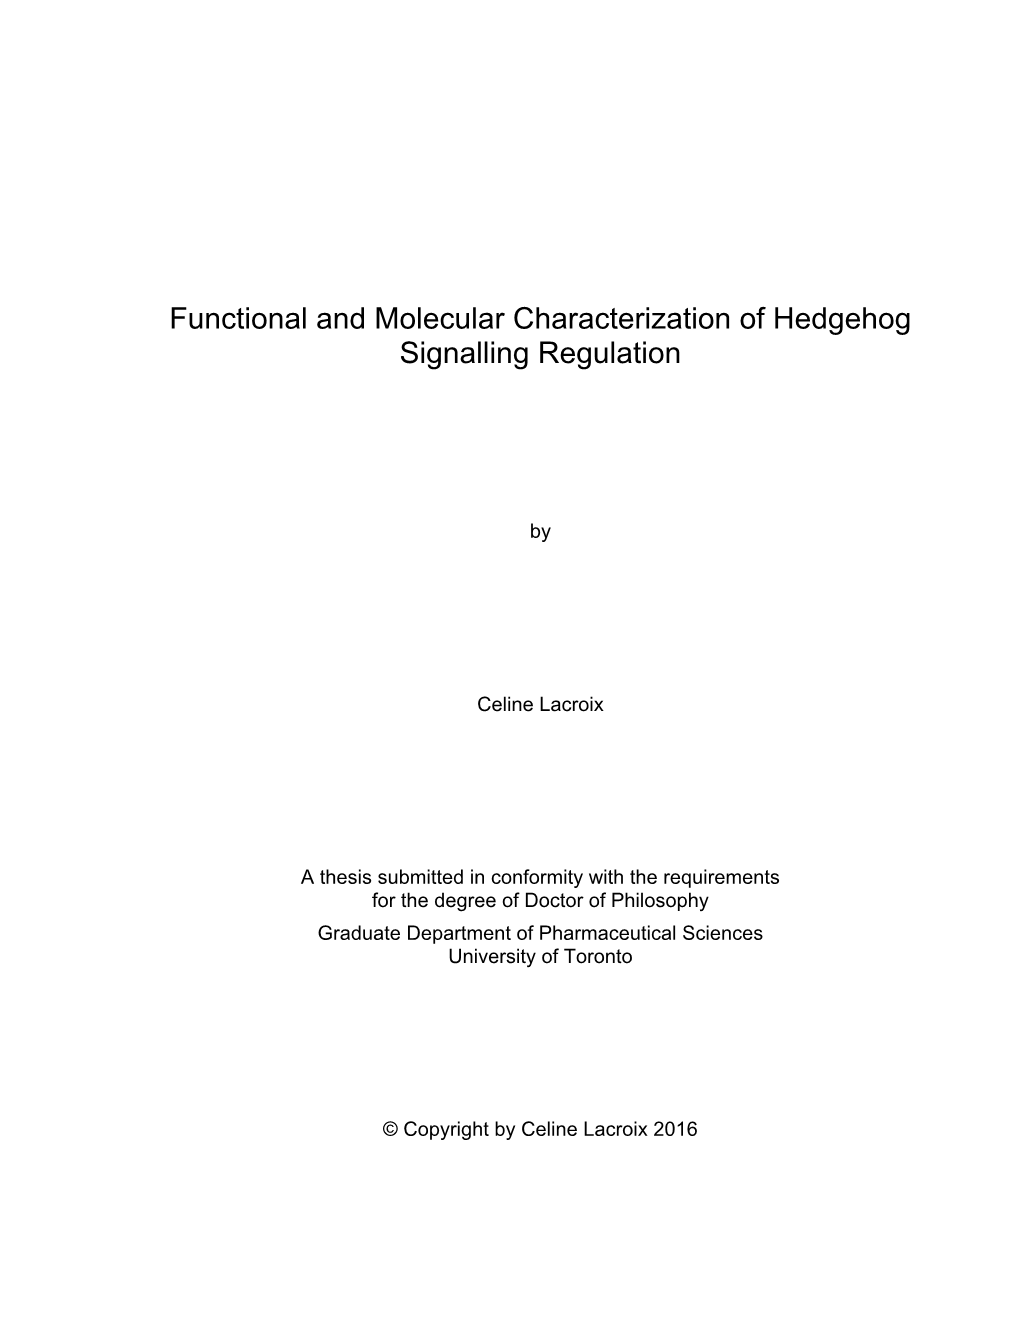 Functional and Molecular Characterization of Hedgehog Signalling Regulation